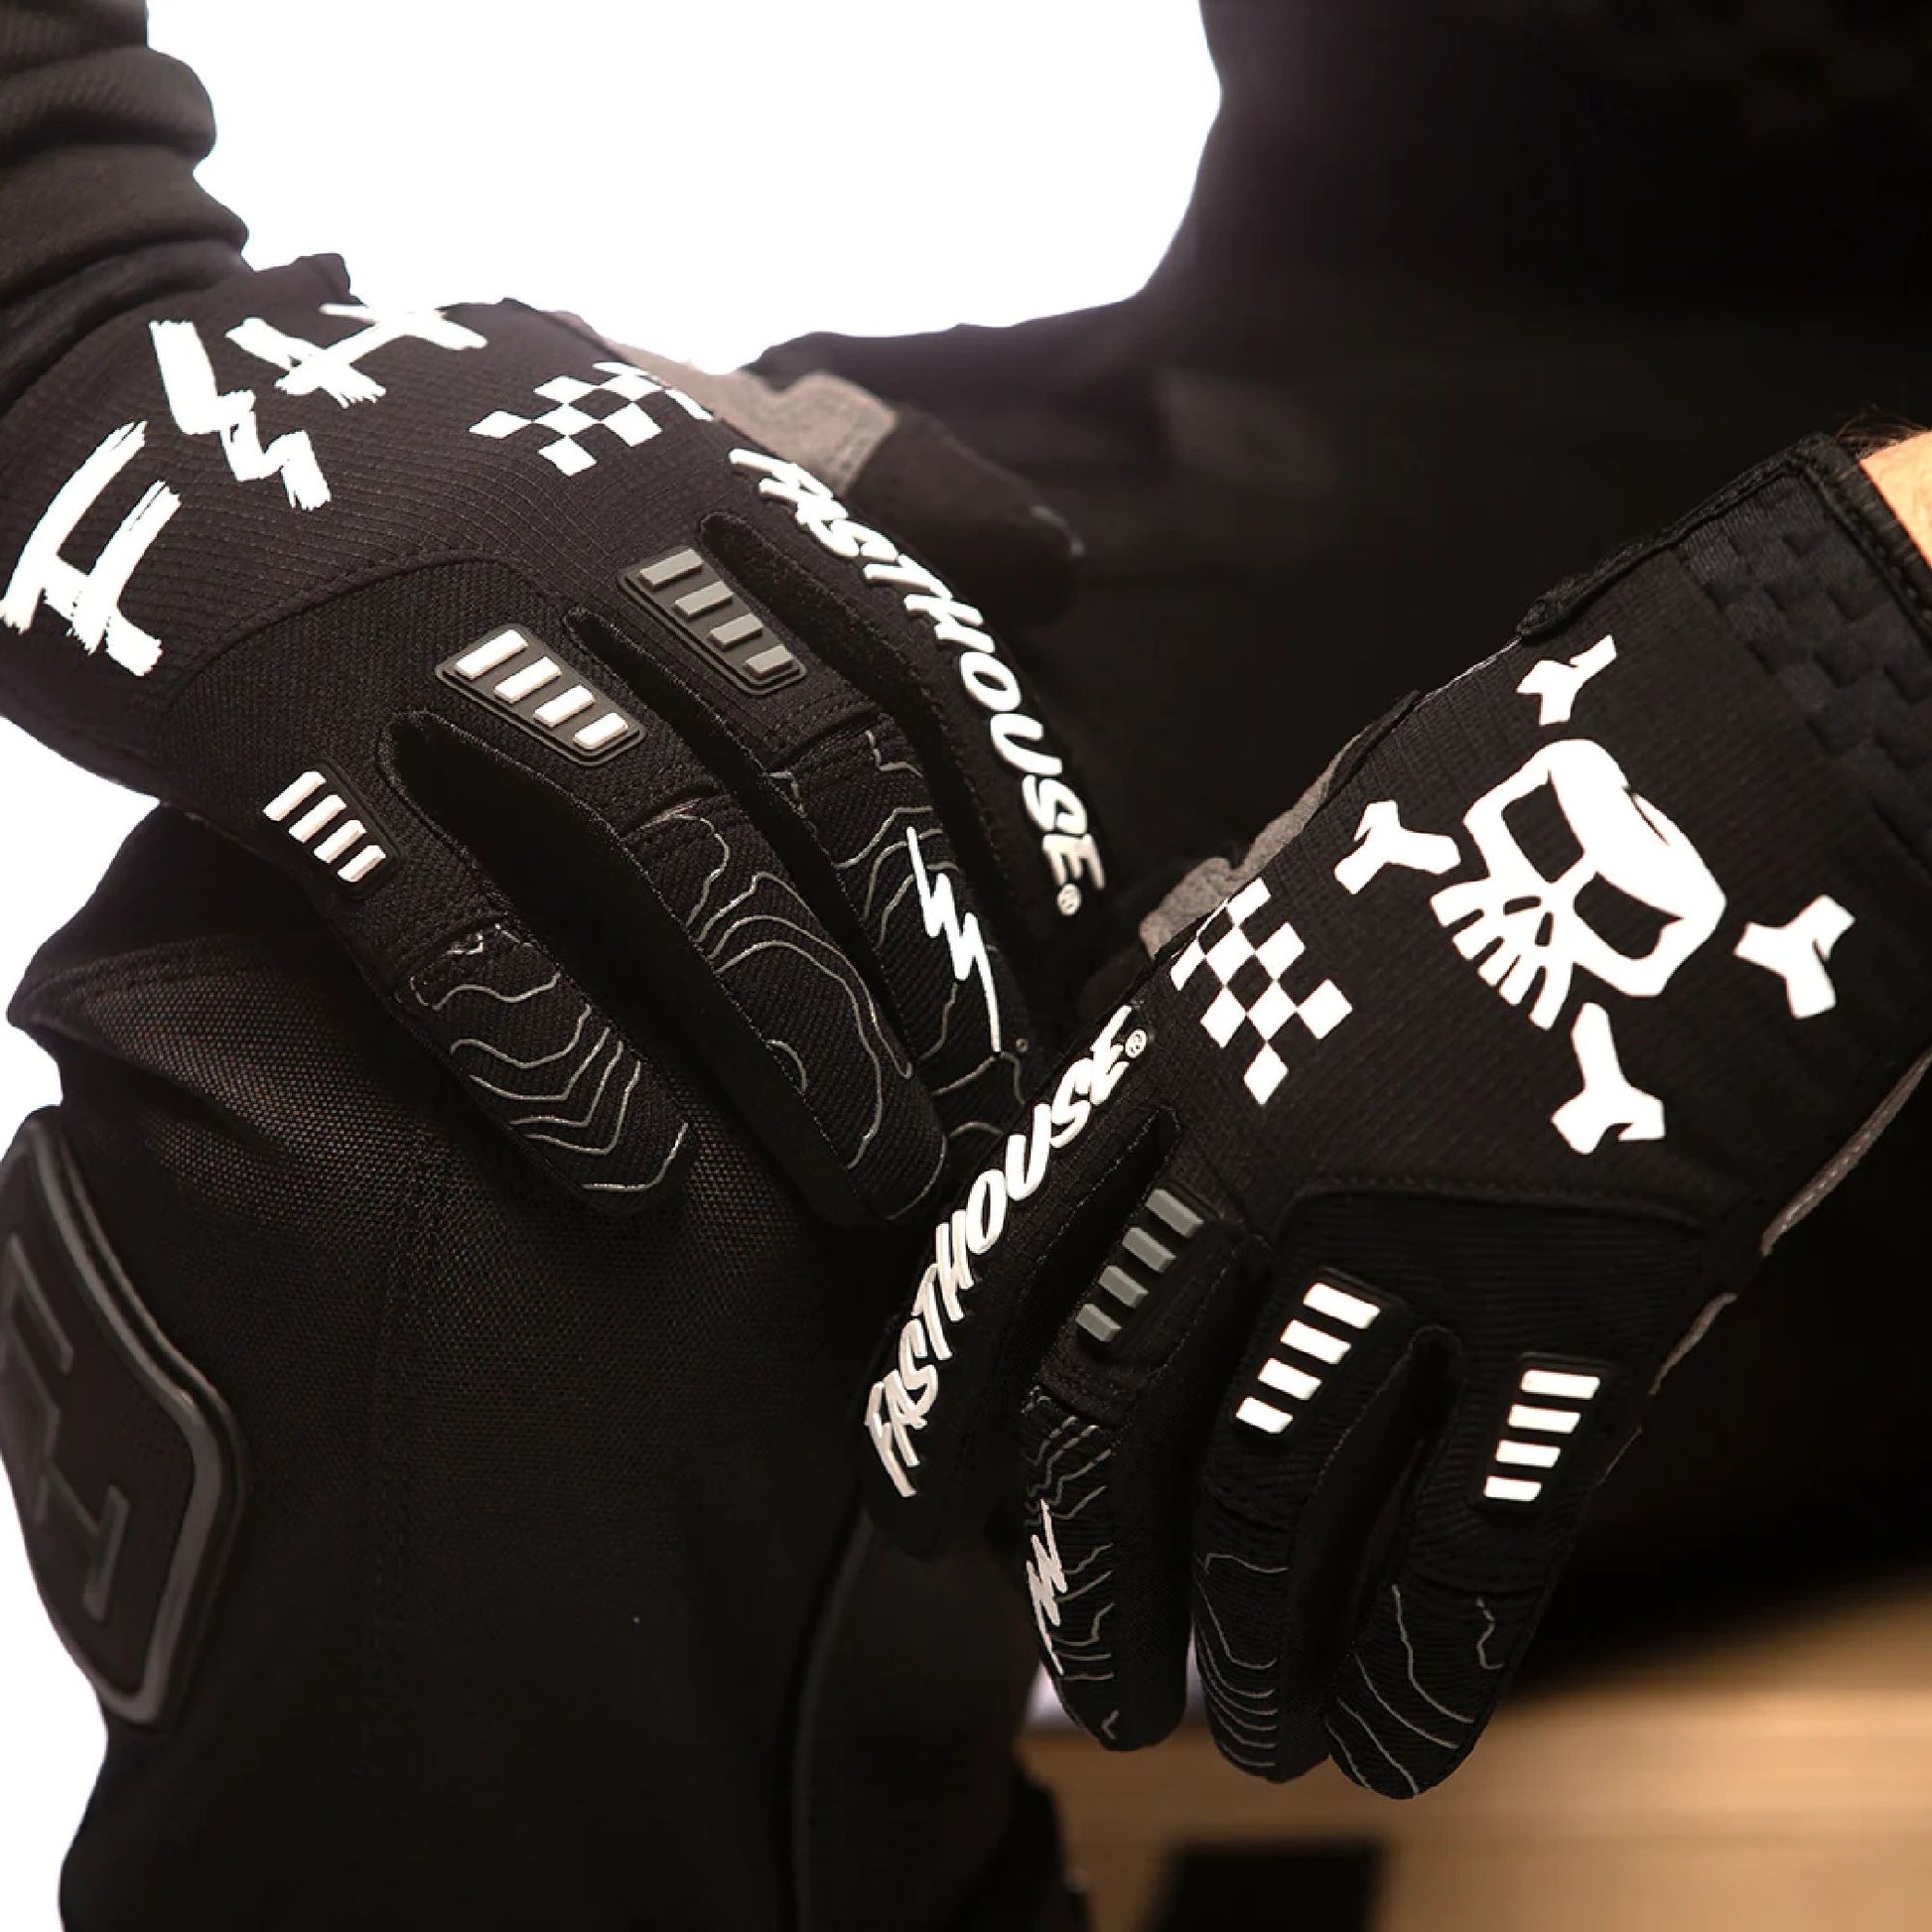 Fasthouse Off-Road Glove Black/White M Bike Gloves